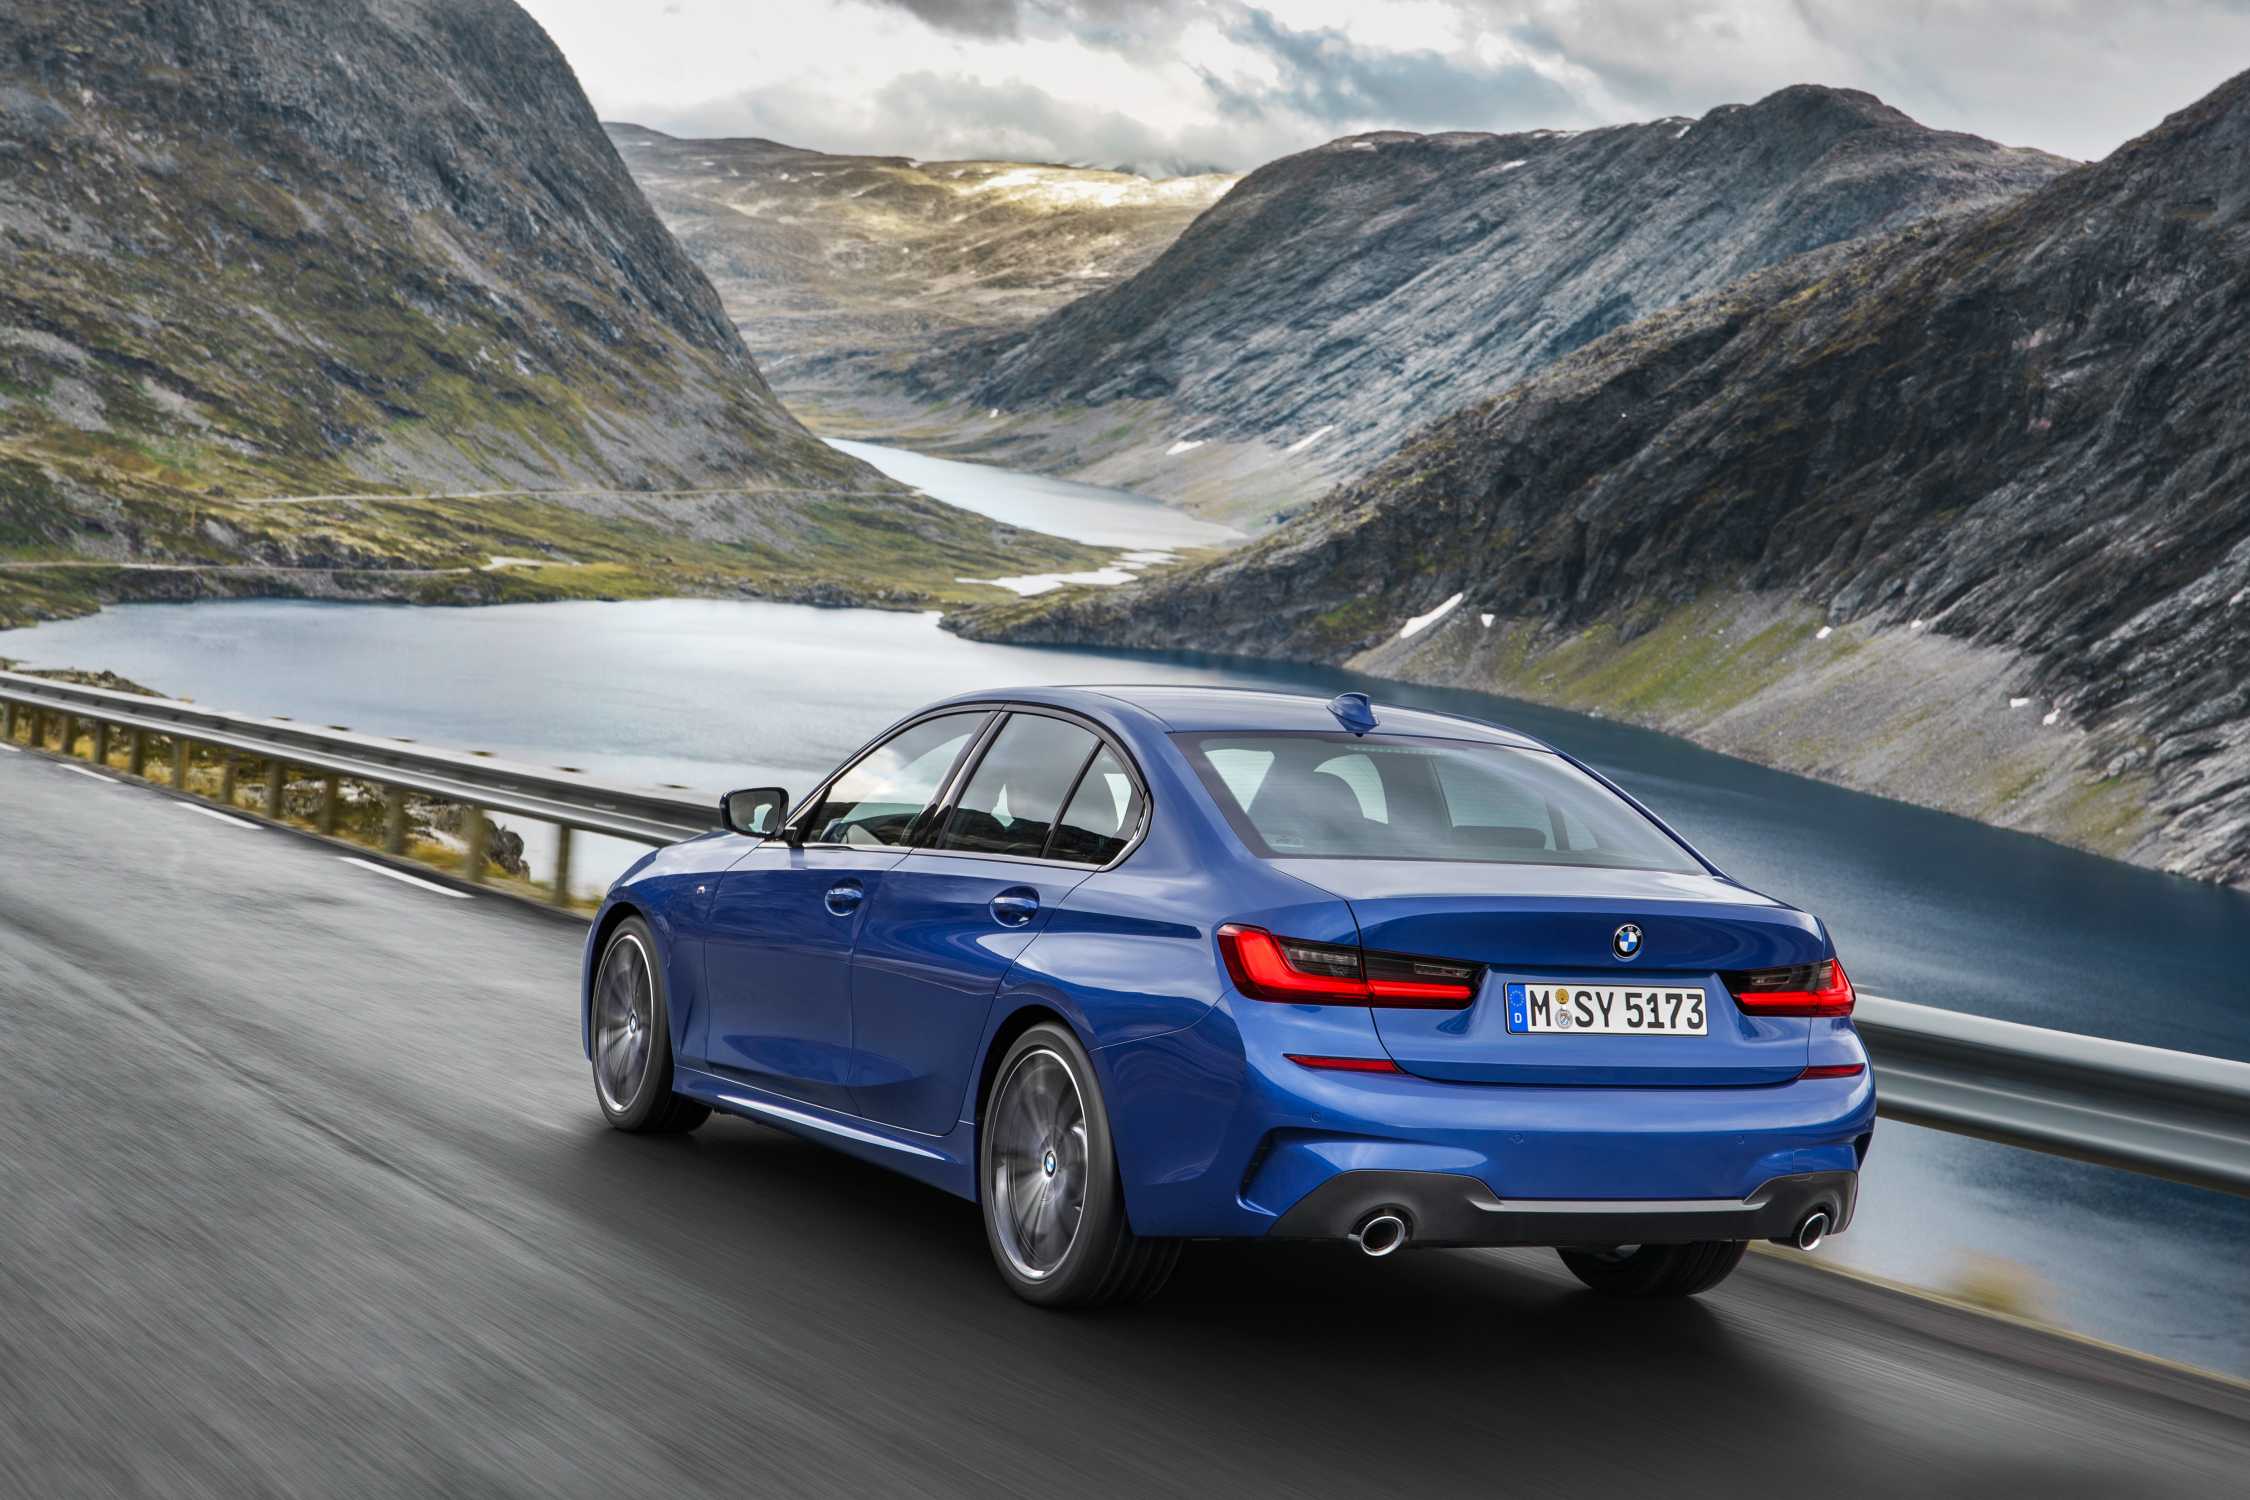 The all-new BMW 3 Series Sedan, Model M Sport, Portimao blue metallic, Rim 19” Styling 791 M (10/2018).